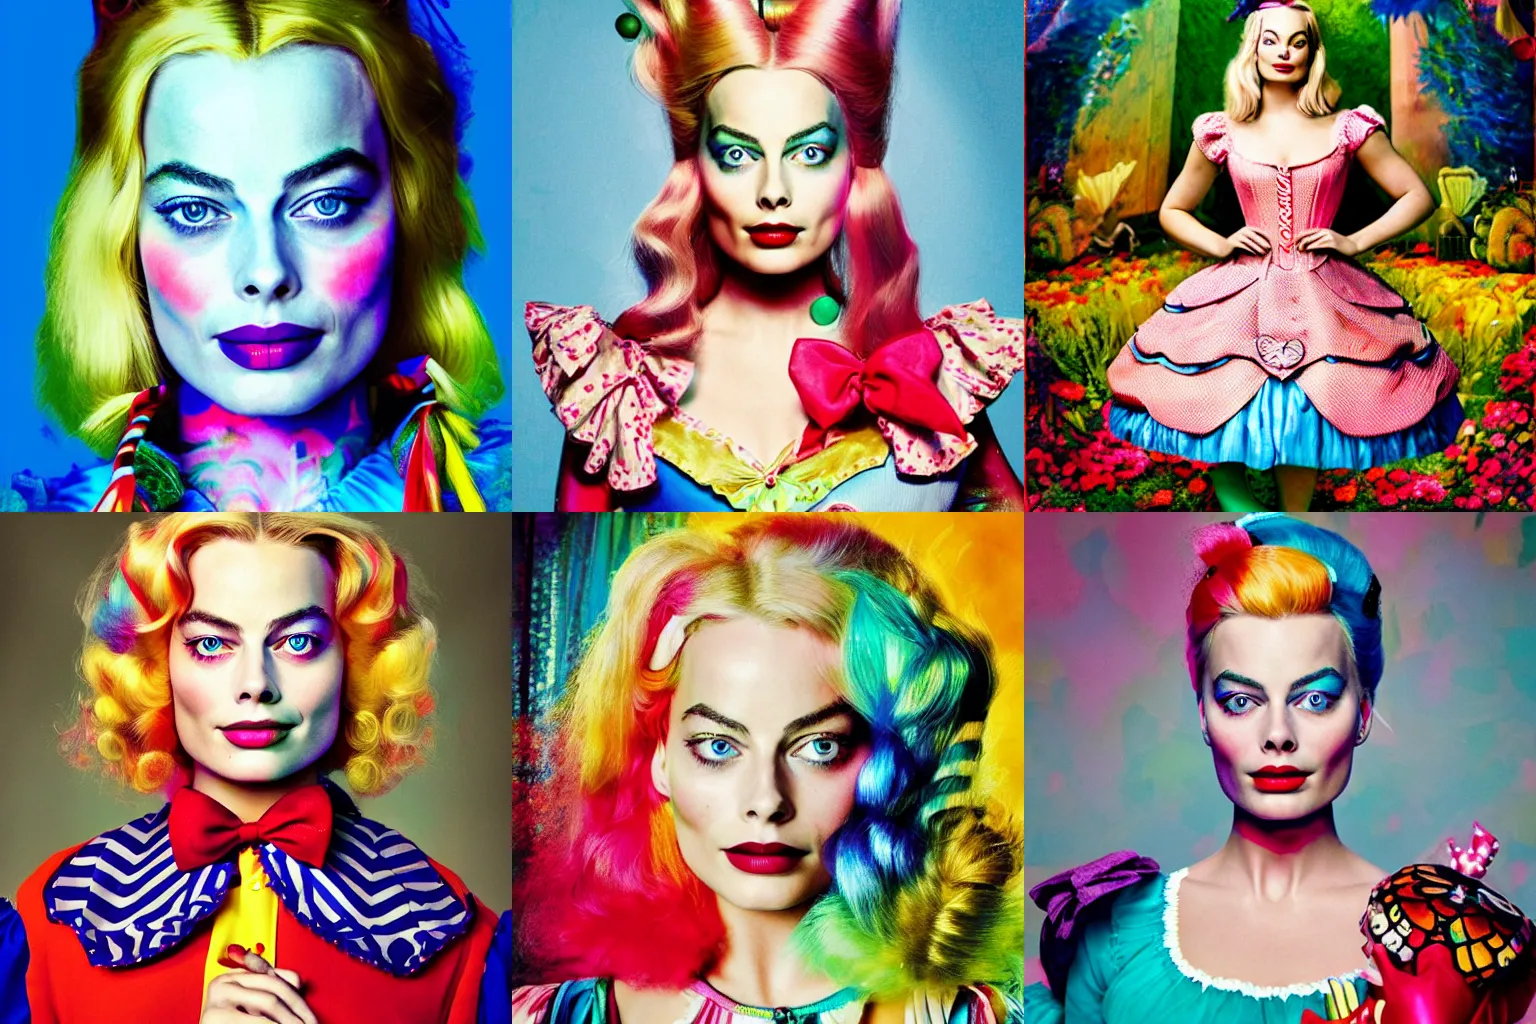 Prompt: Colorful portrait of Margot Robbie as Alice in Wonderland